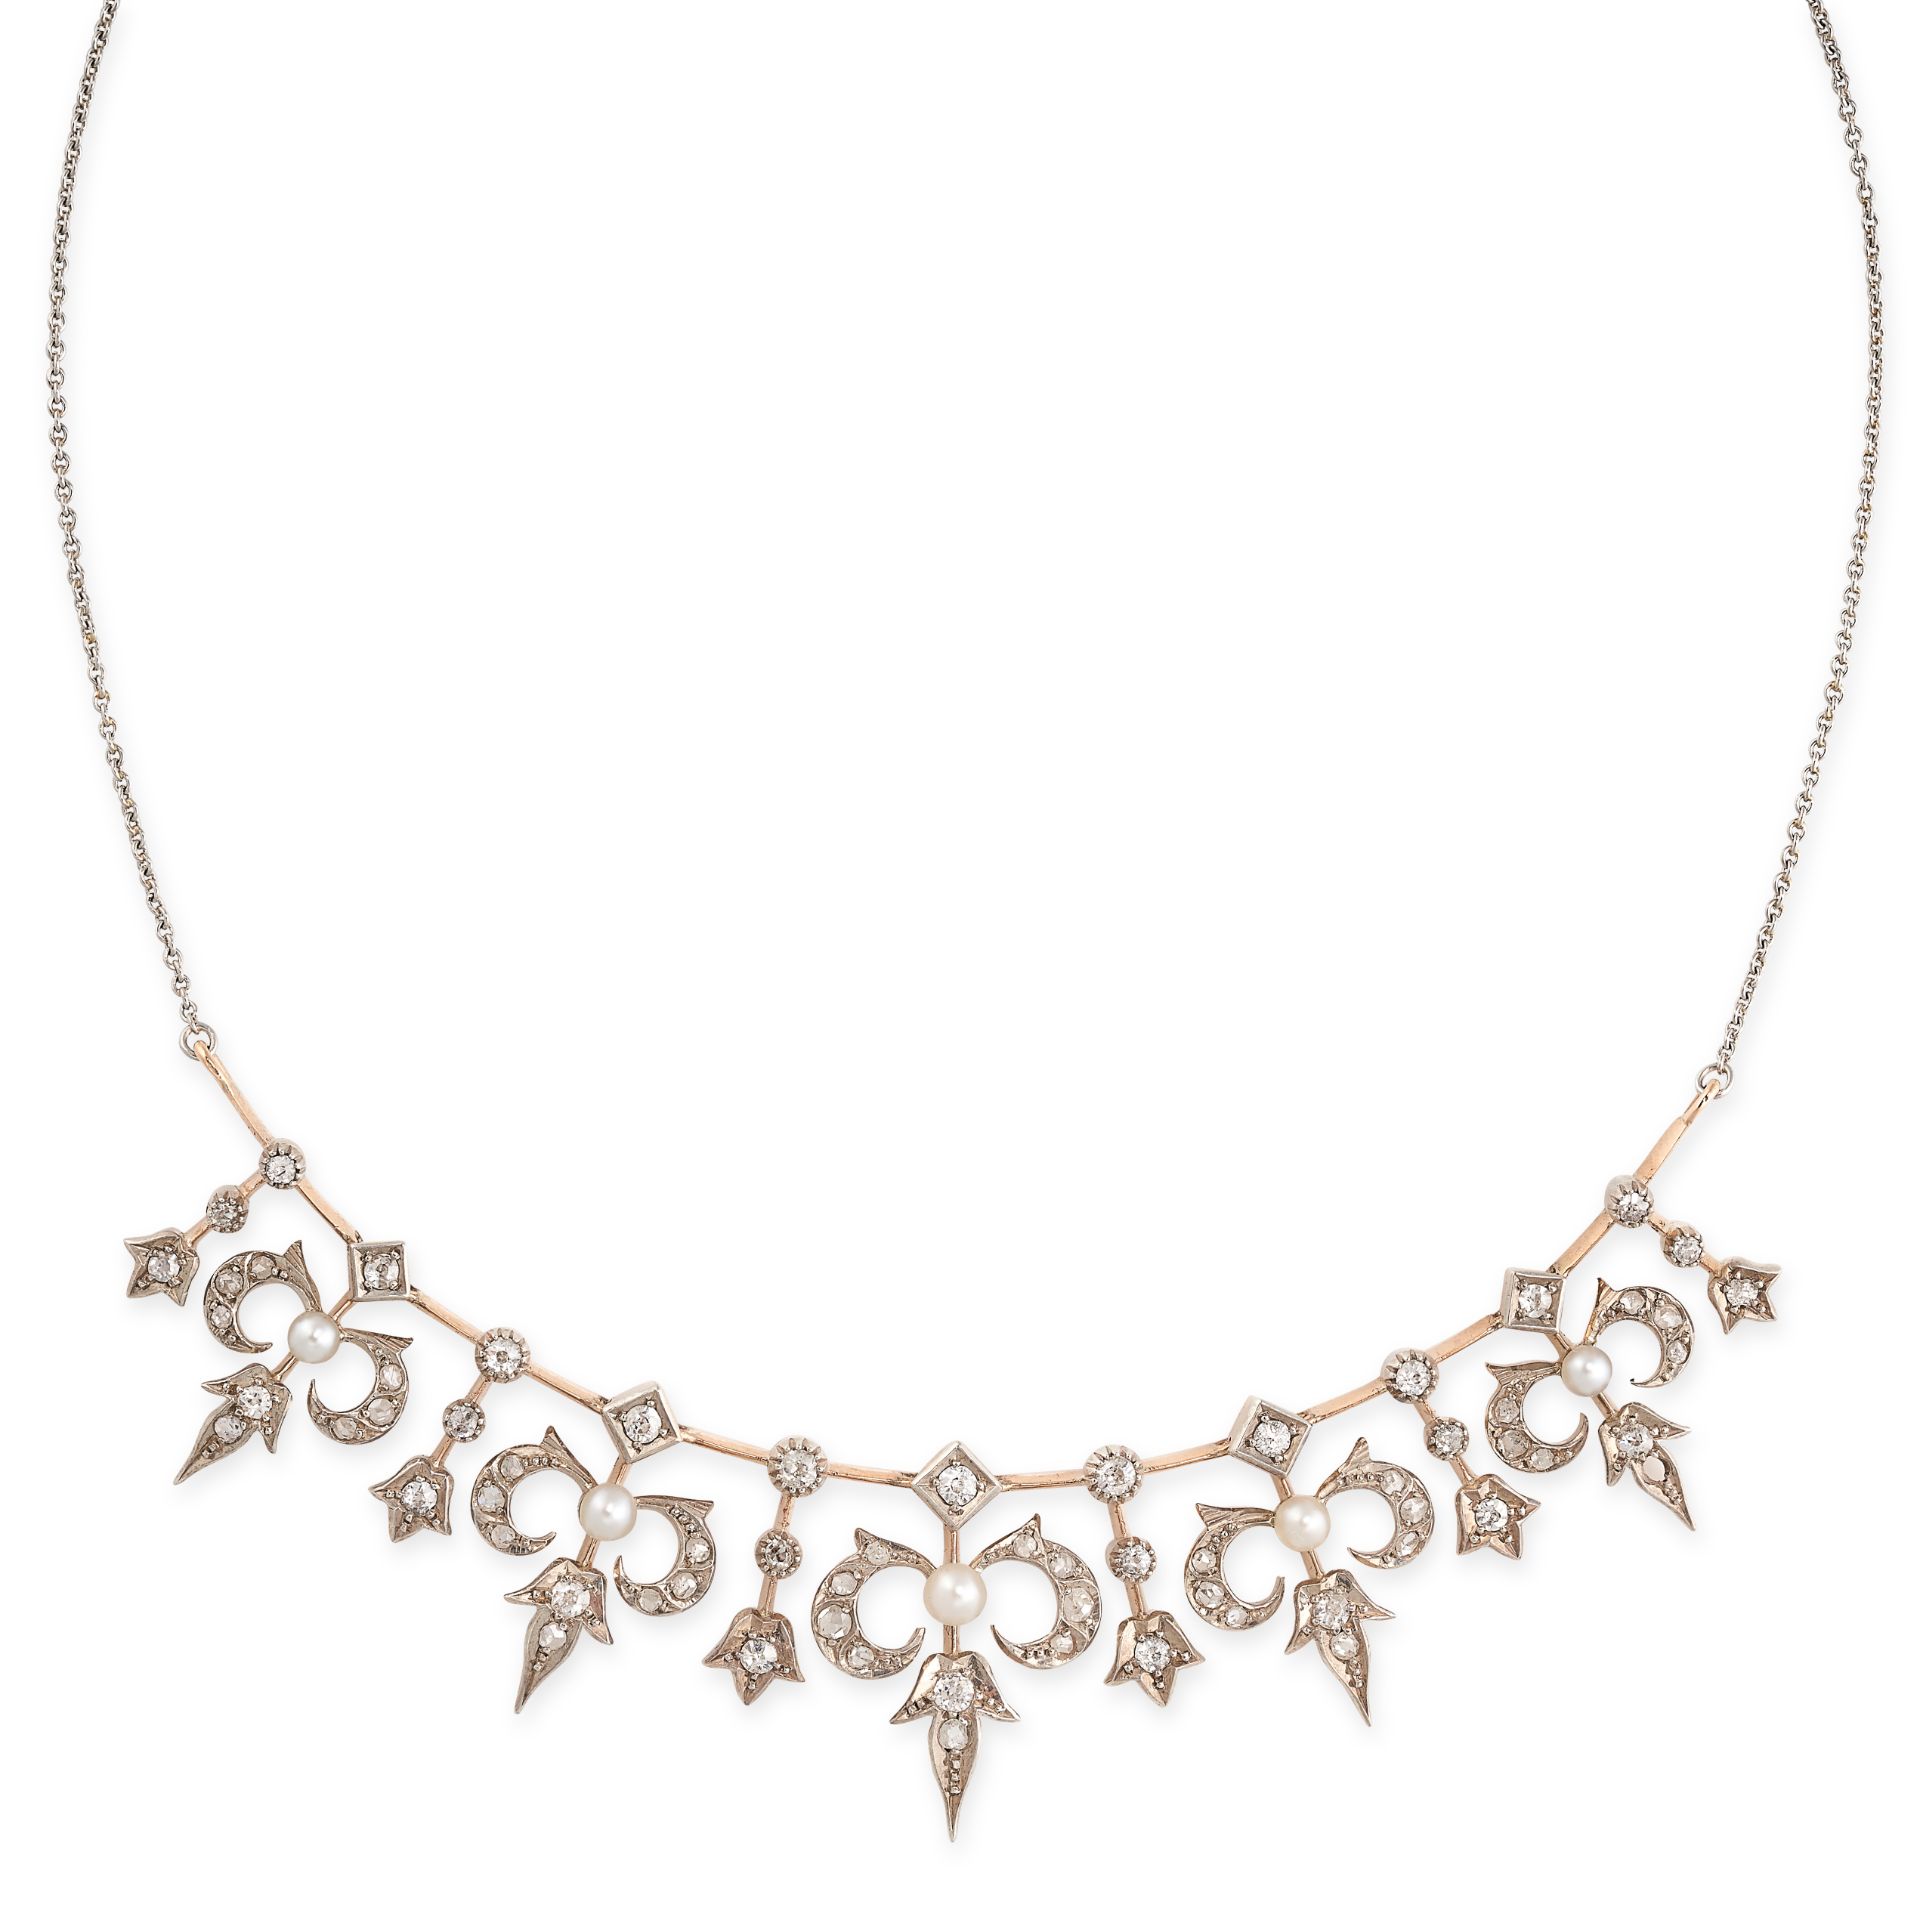 AN ANTIQUE DIAMOND AND PEARL NECKLACE designed as a series of graduated fleur-de-lis motifs,